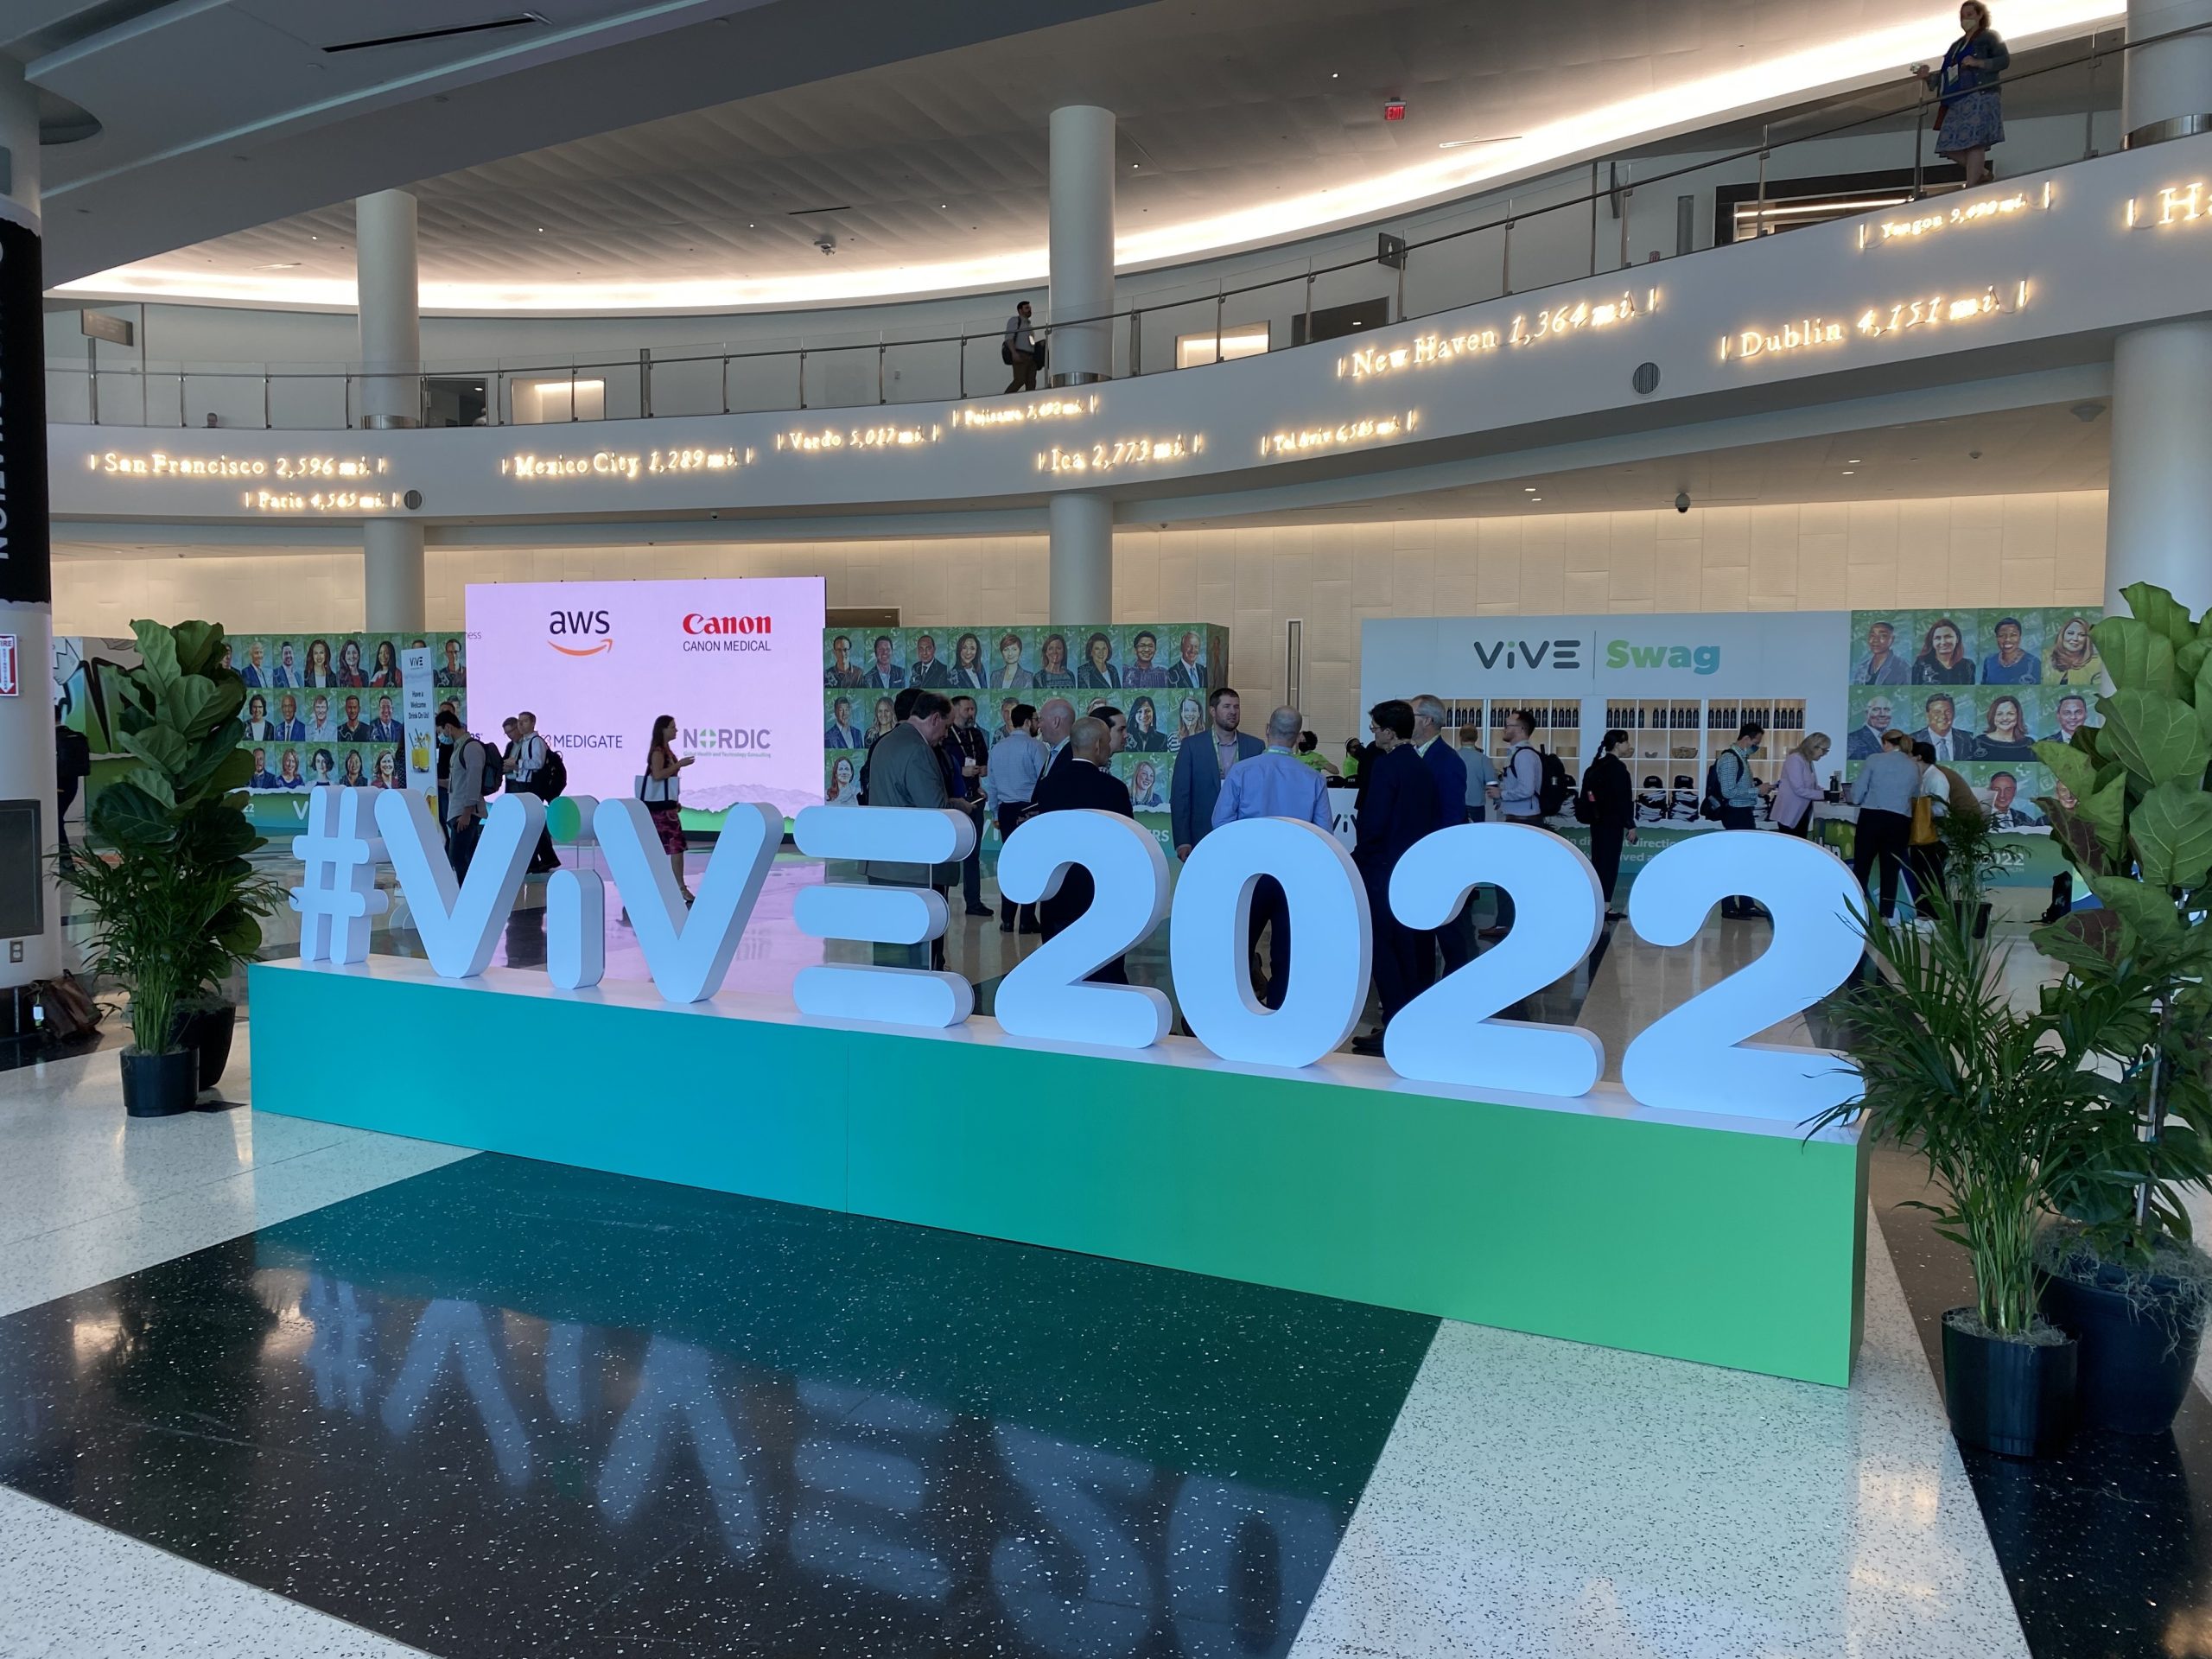 ViVE 2022 - Event logo in lobby